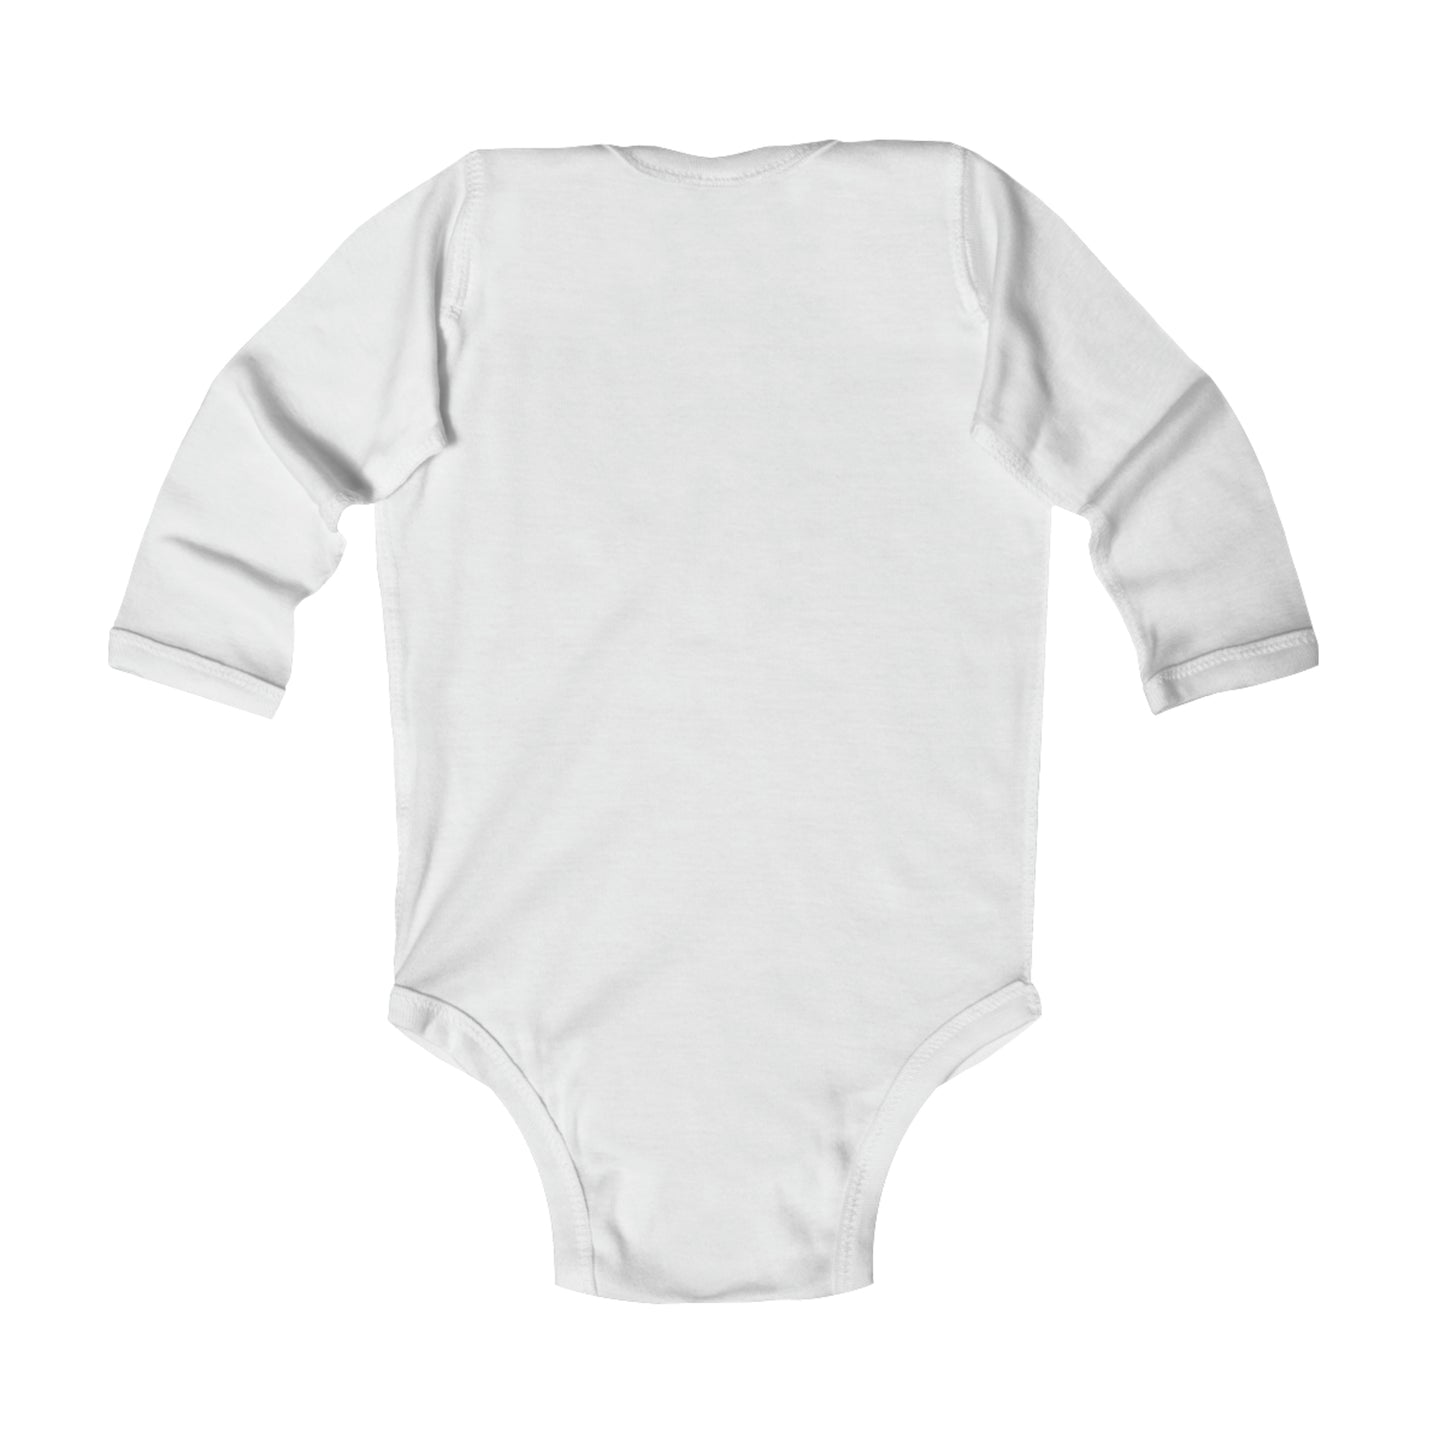 GRUMONH - Infant Long Sleeve Bodysuit